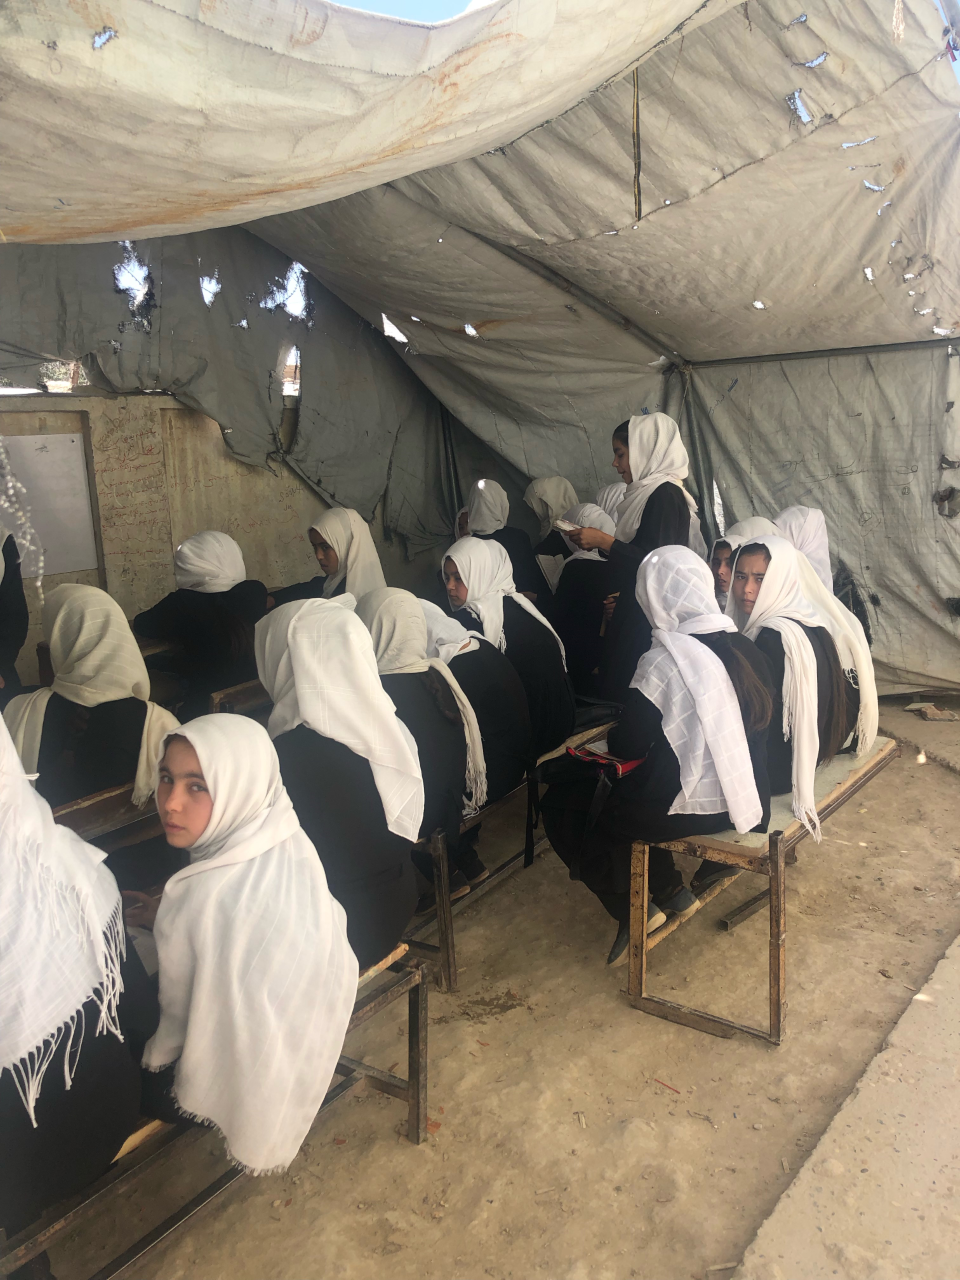 Students attending school in tents